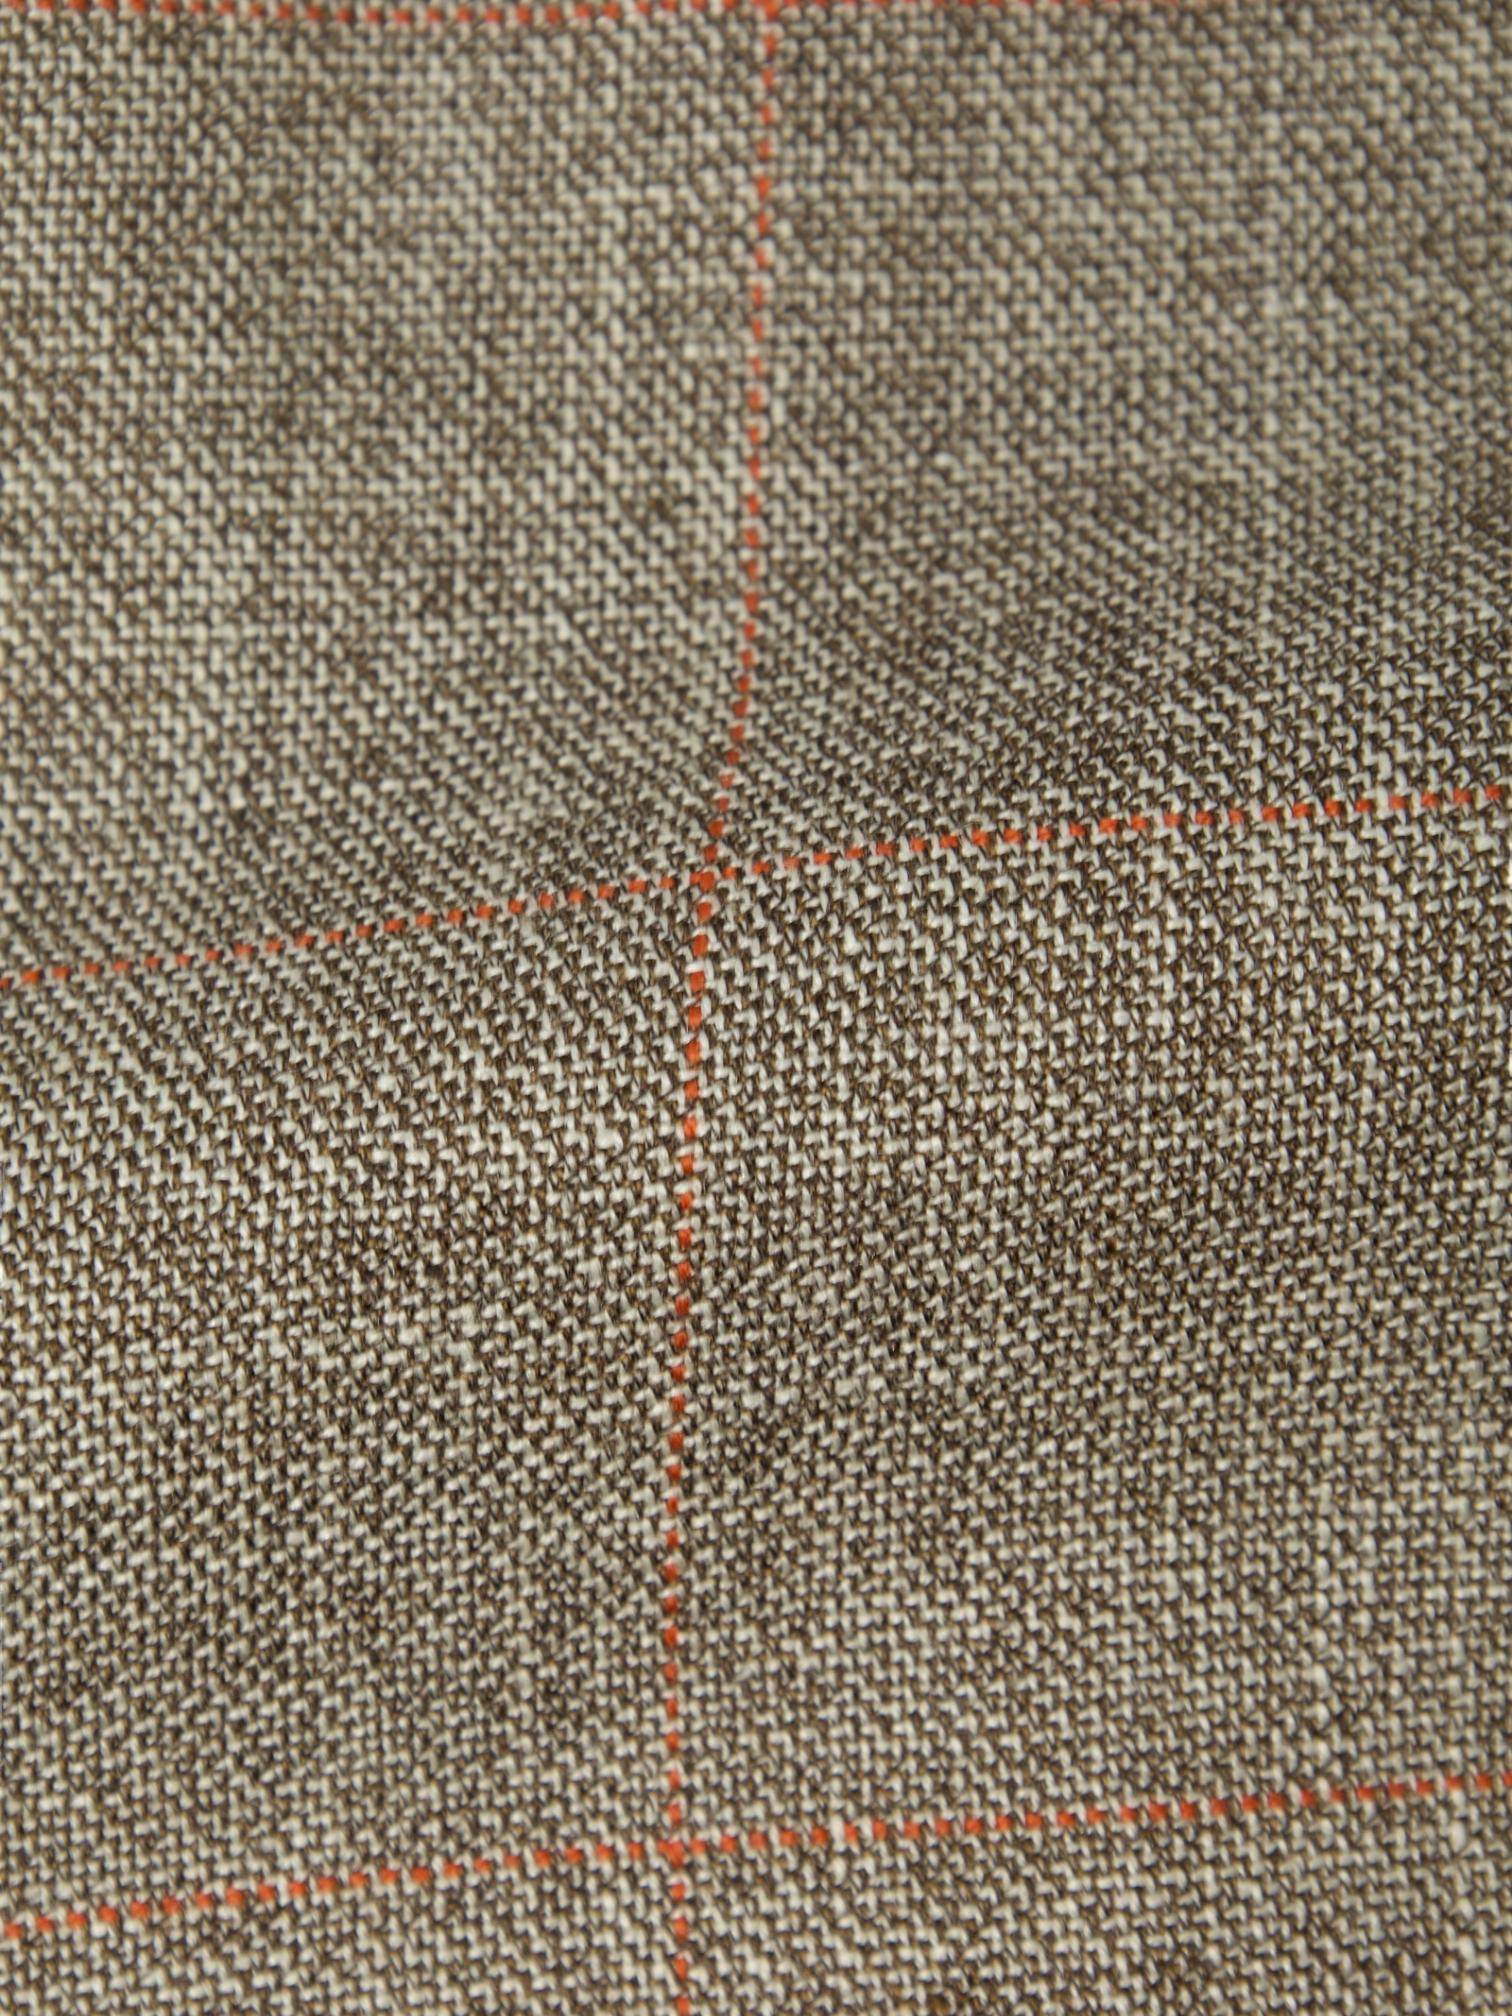 Kiton Taupe Cashmere, Linen & Silk Windowpane Jacket